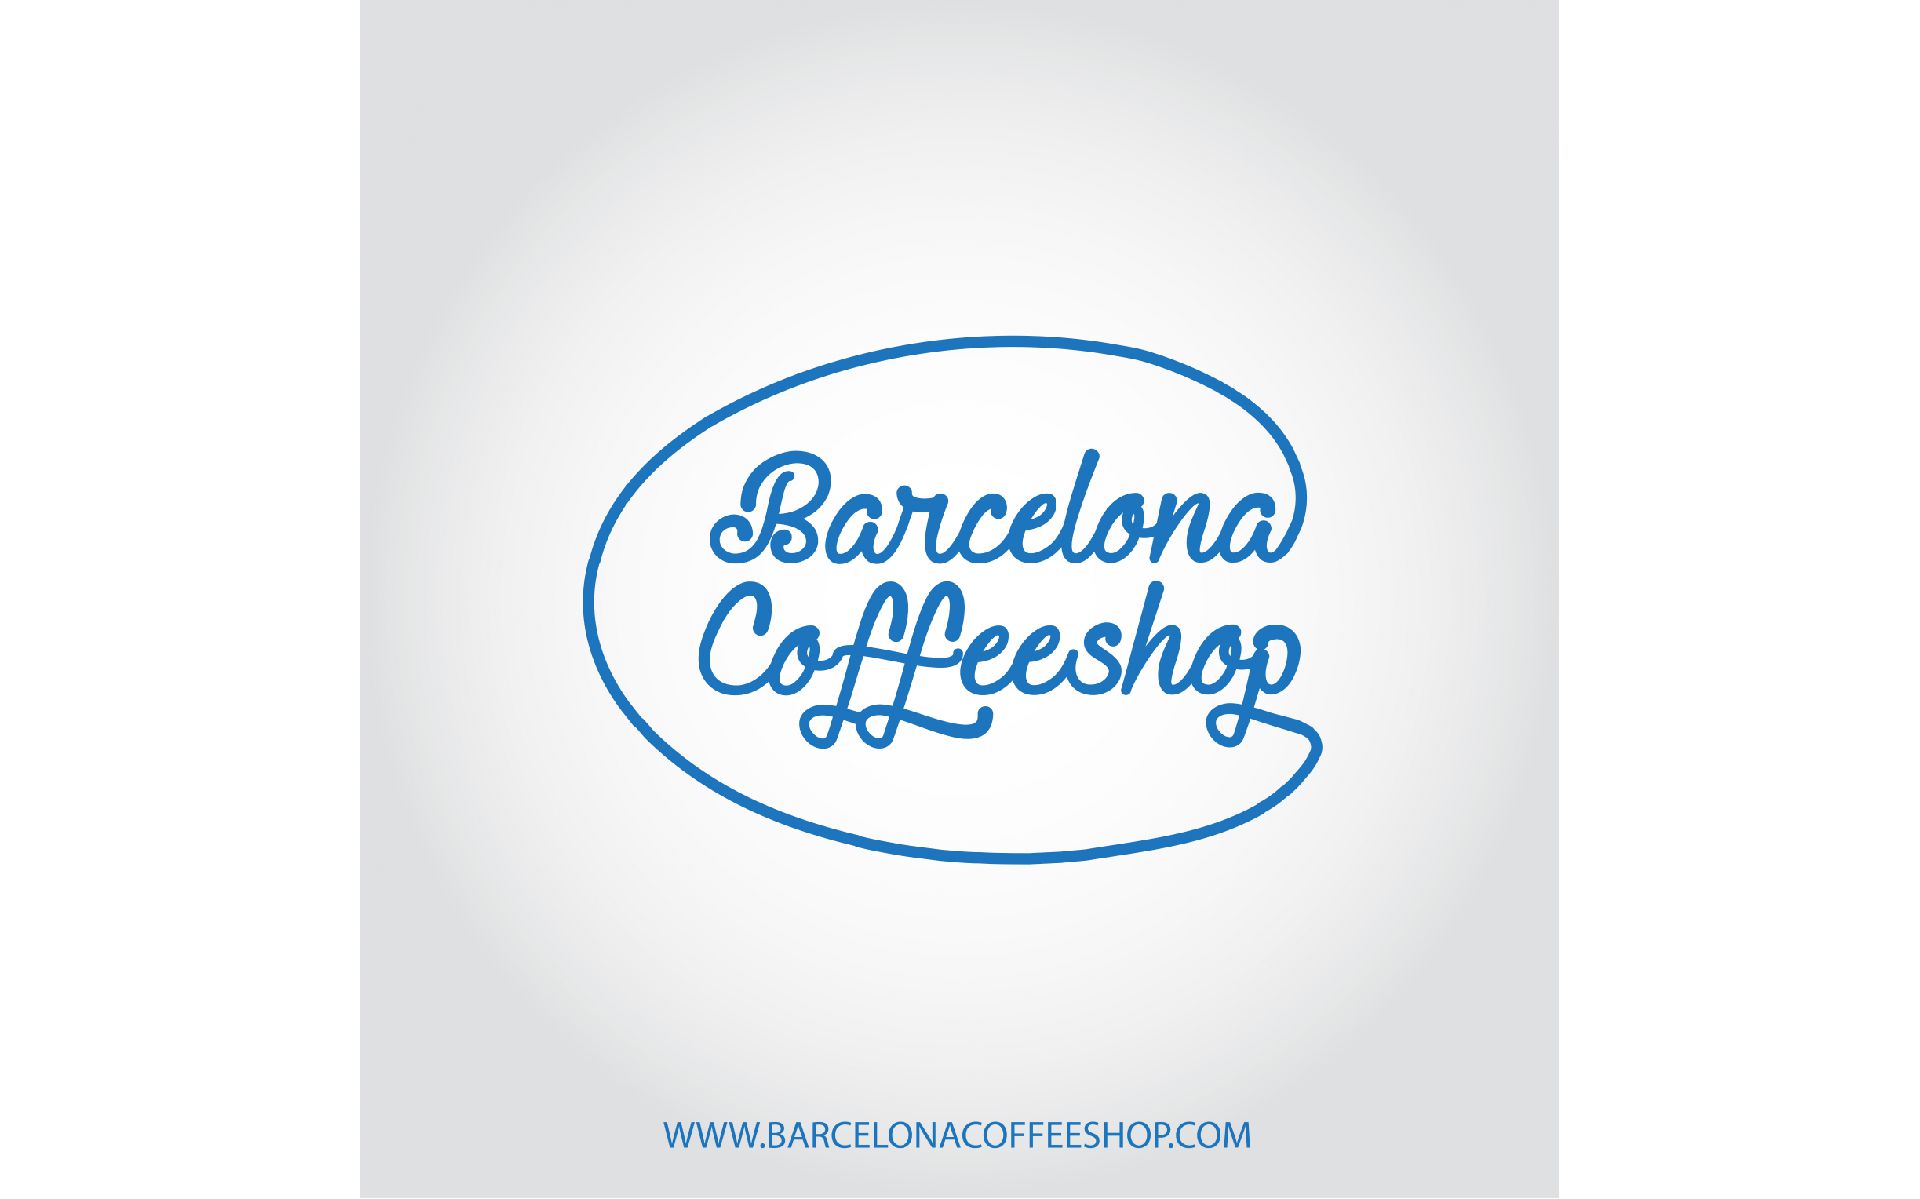 weed club barcelona coffeeshop